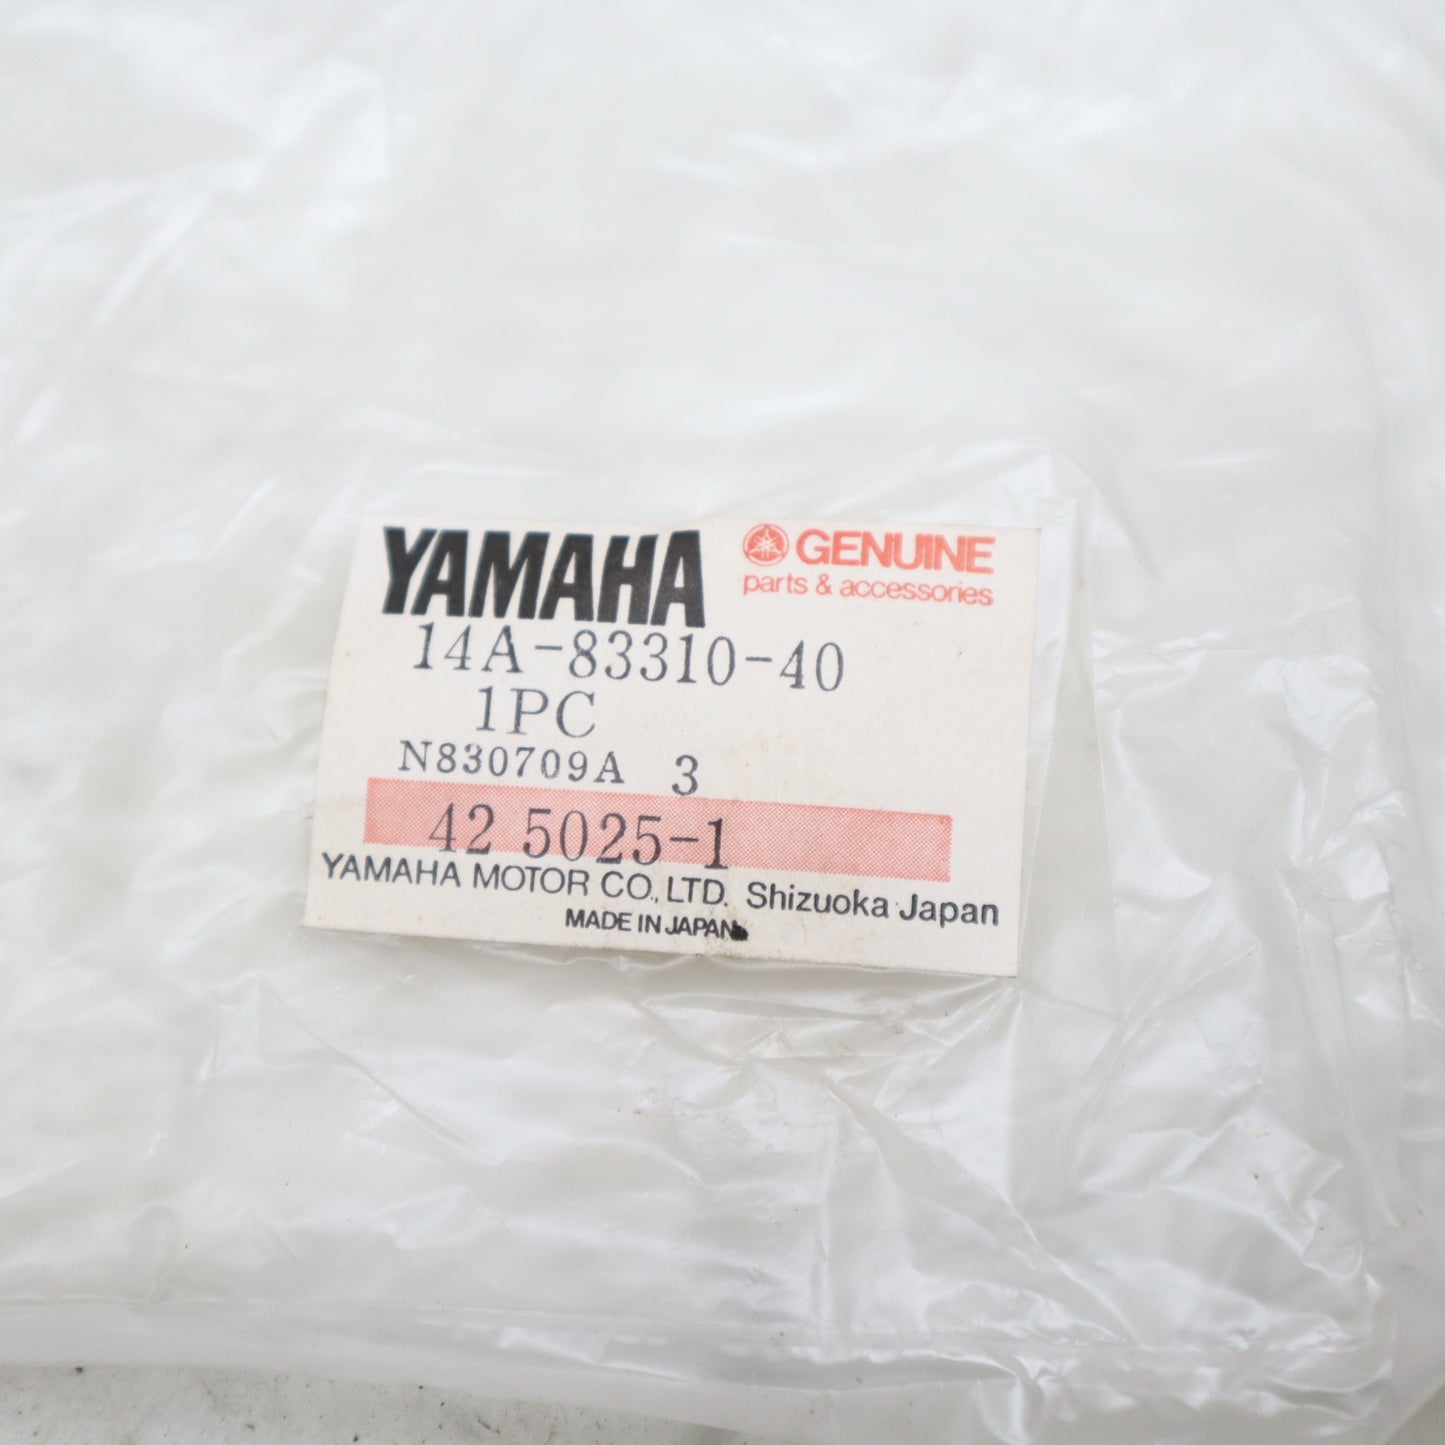 Yamaha CV 50 Roller 14A-83310-40 NOS